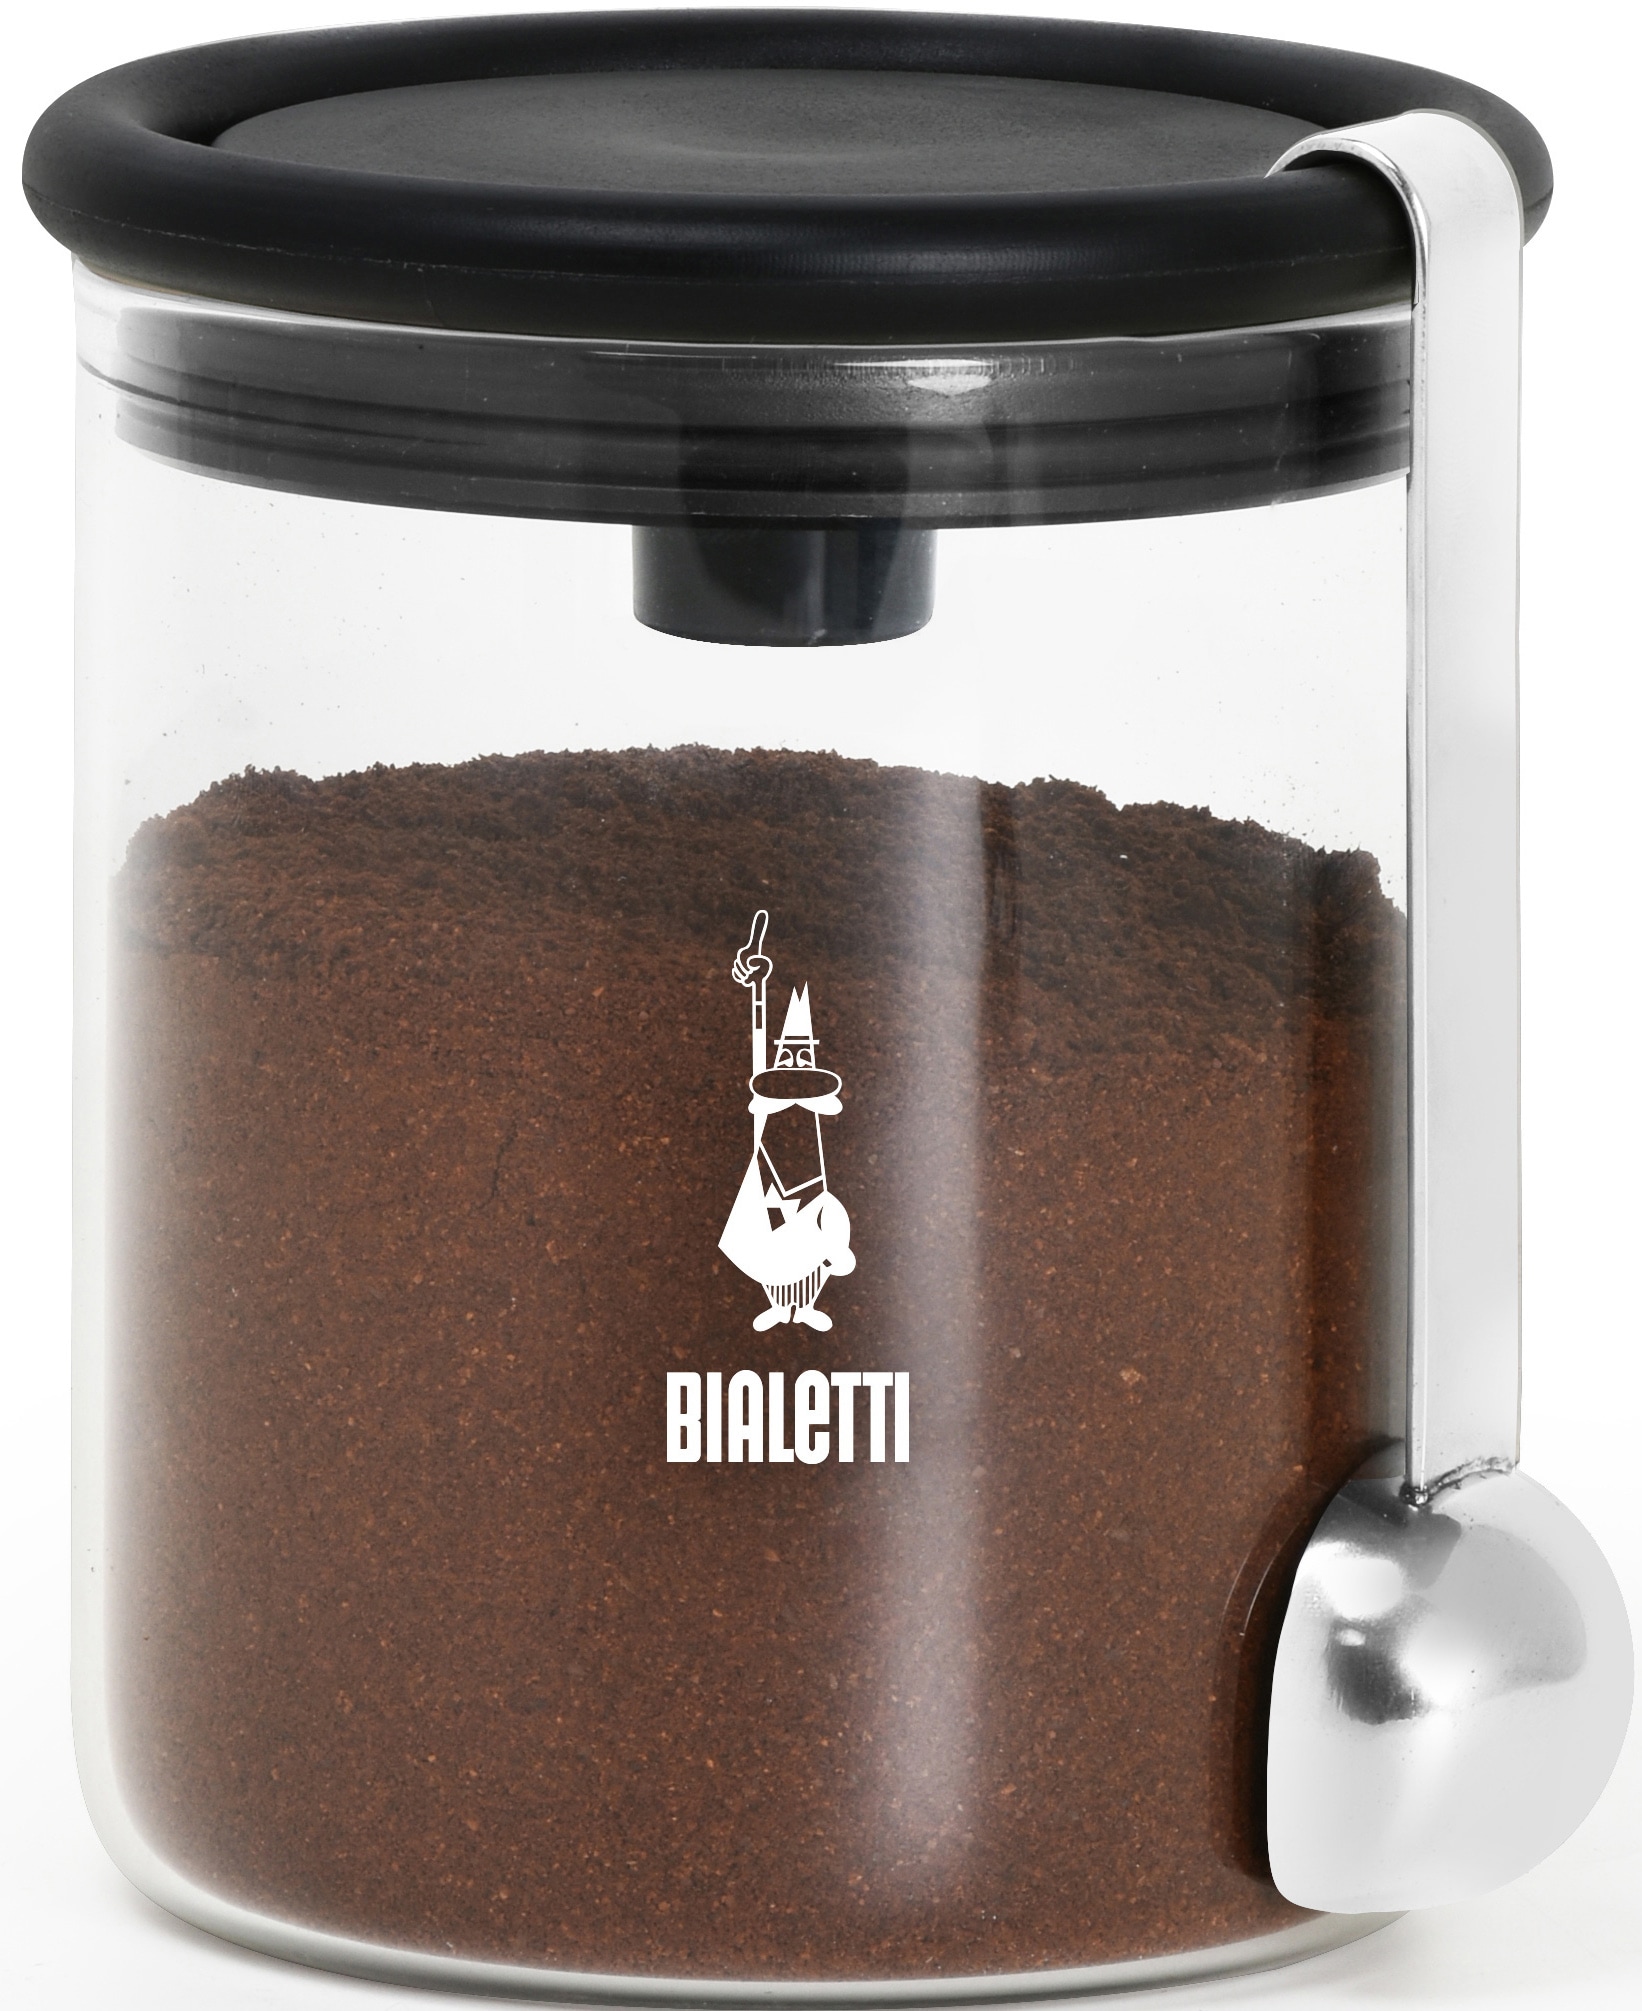 BIALETTI Kaffeedose, (2 tlg.), für Kaffee, Inhalt: 250 g farblos Kaffeedose Zubehör Kaffeemaschinen Kaffee Espresso Haushaltsgeräte